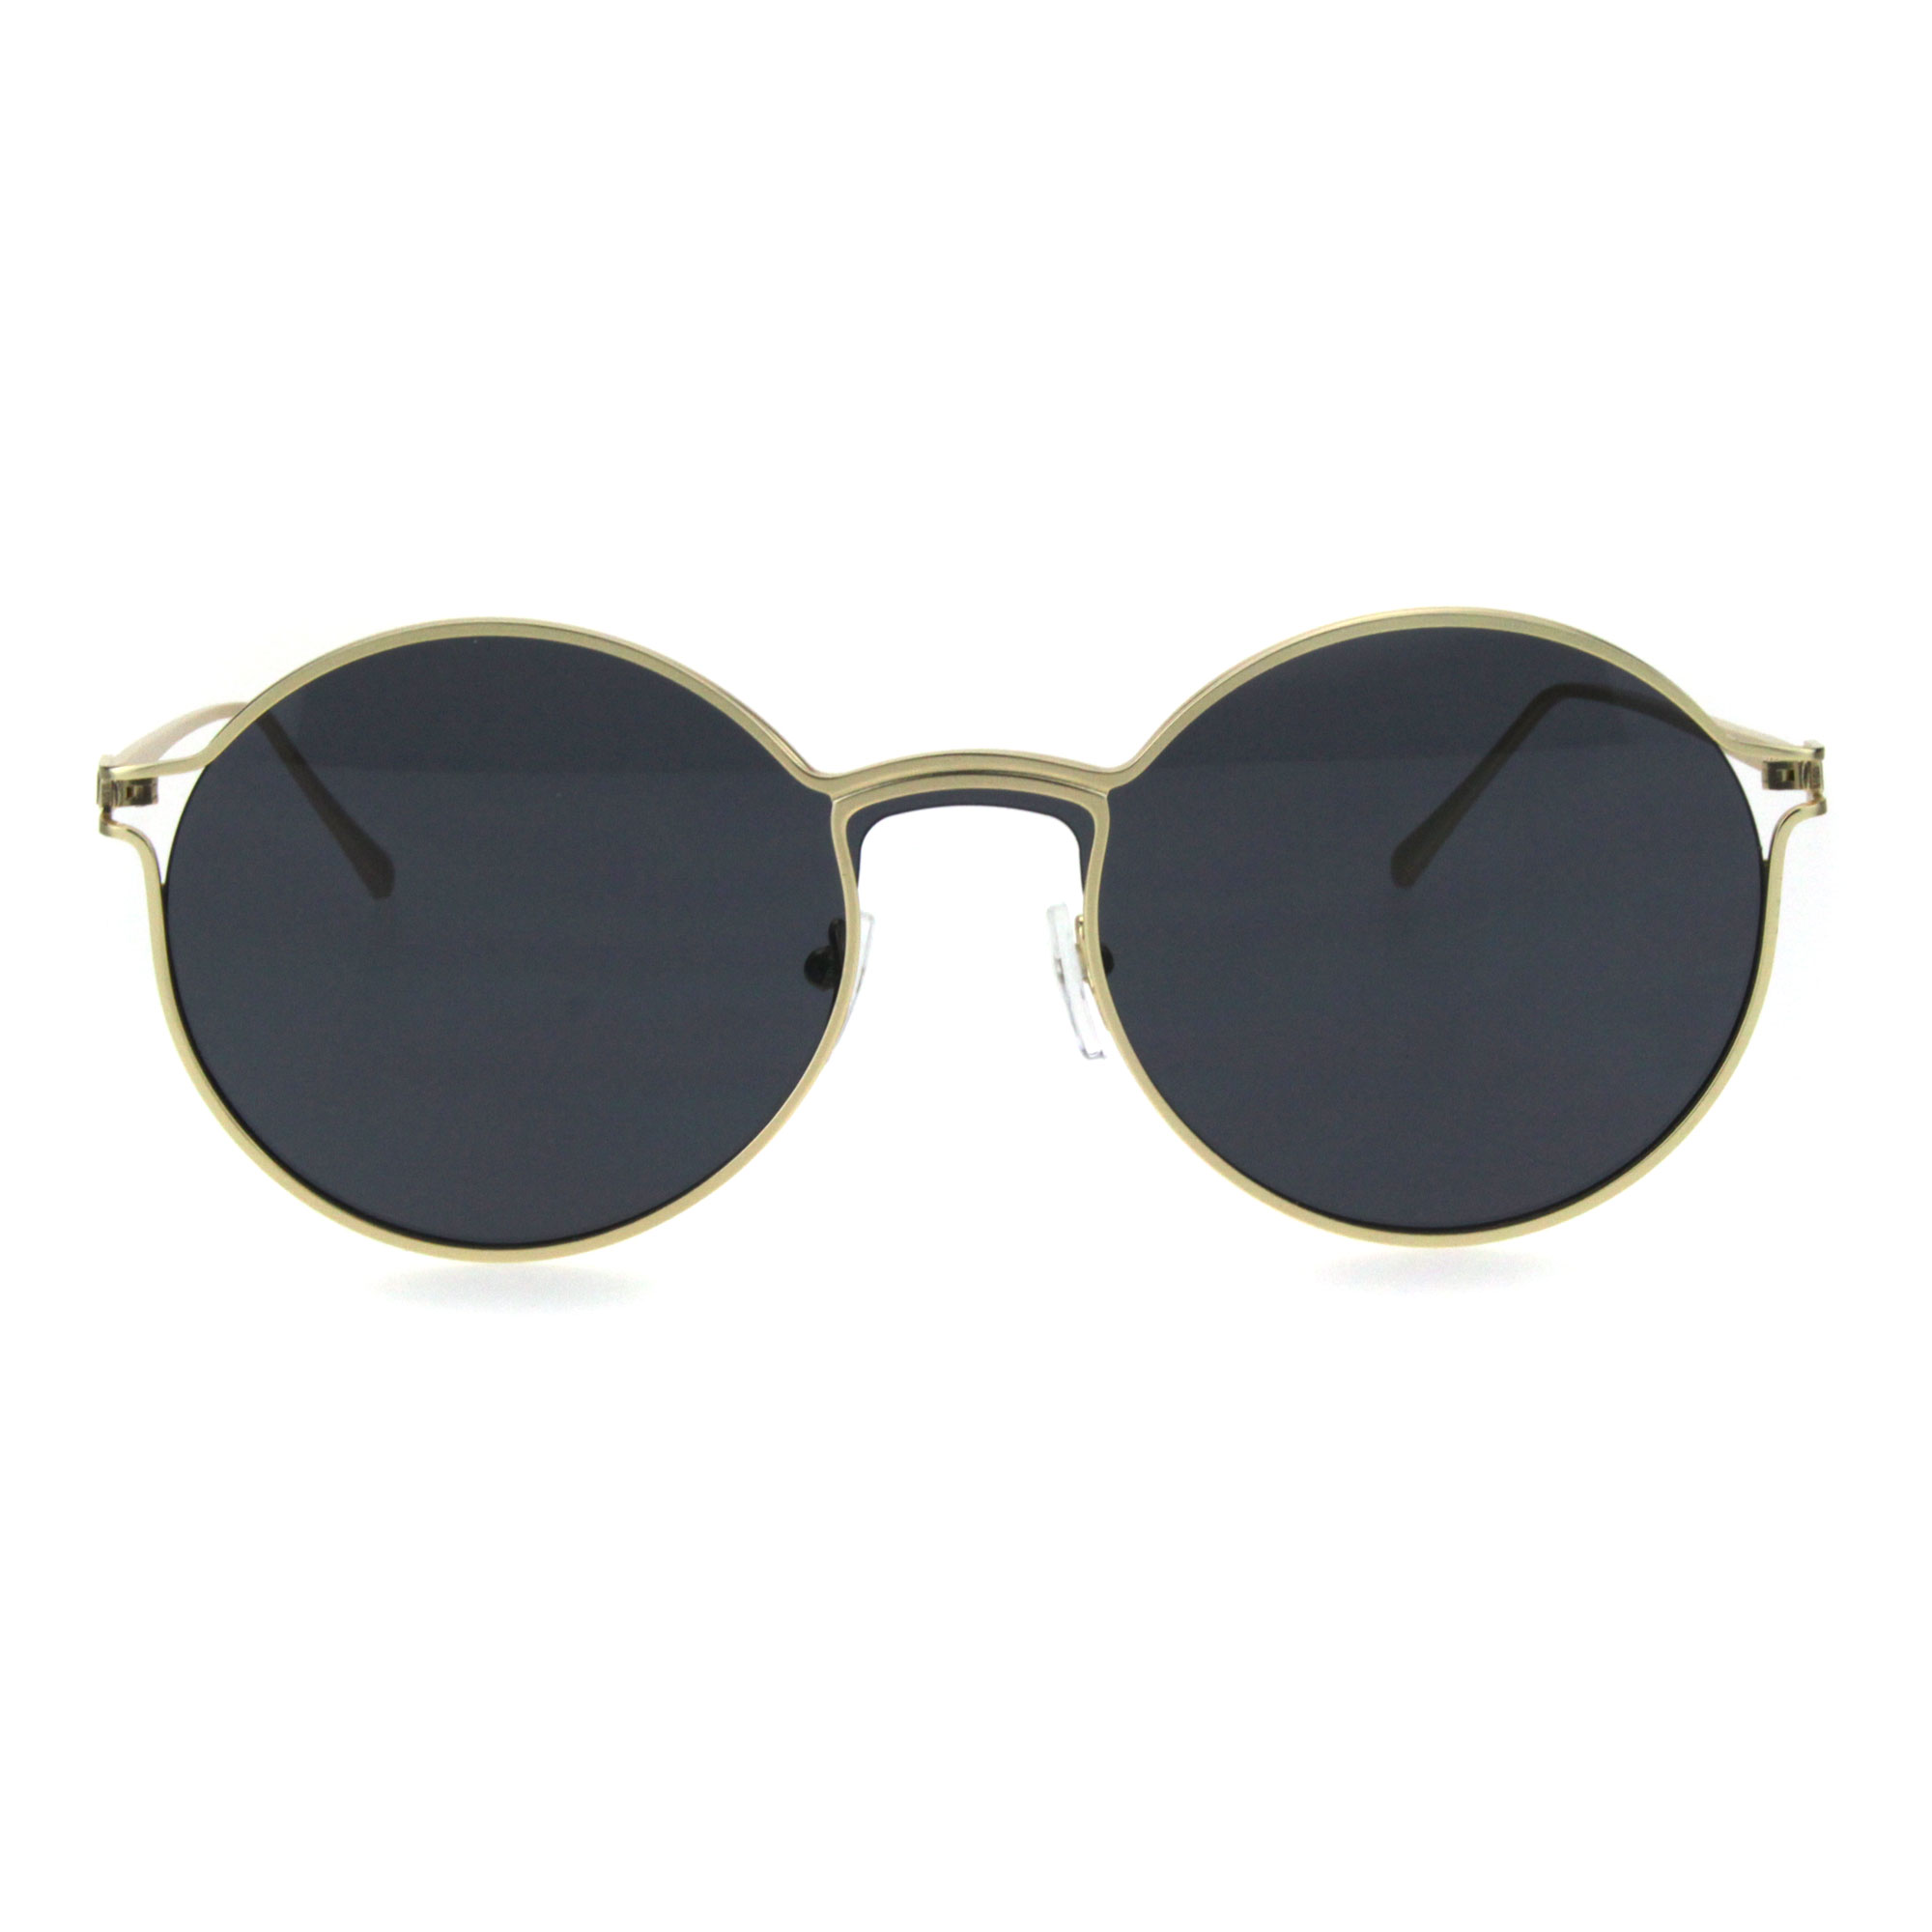 Round Retro Vintage Classic Trendy Hippie Sunglasses Gold Black - image 1 of 4